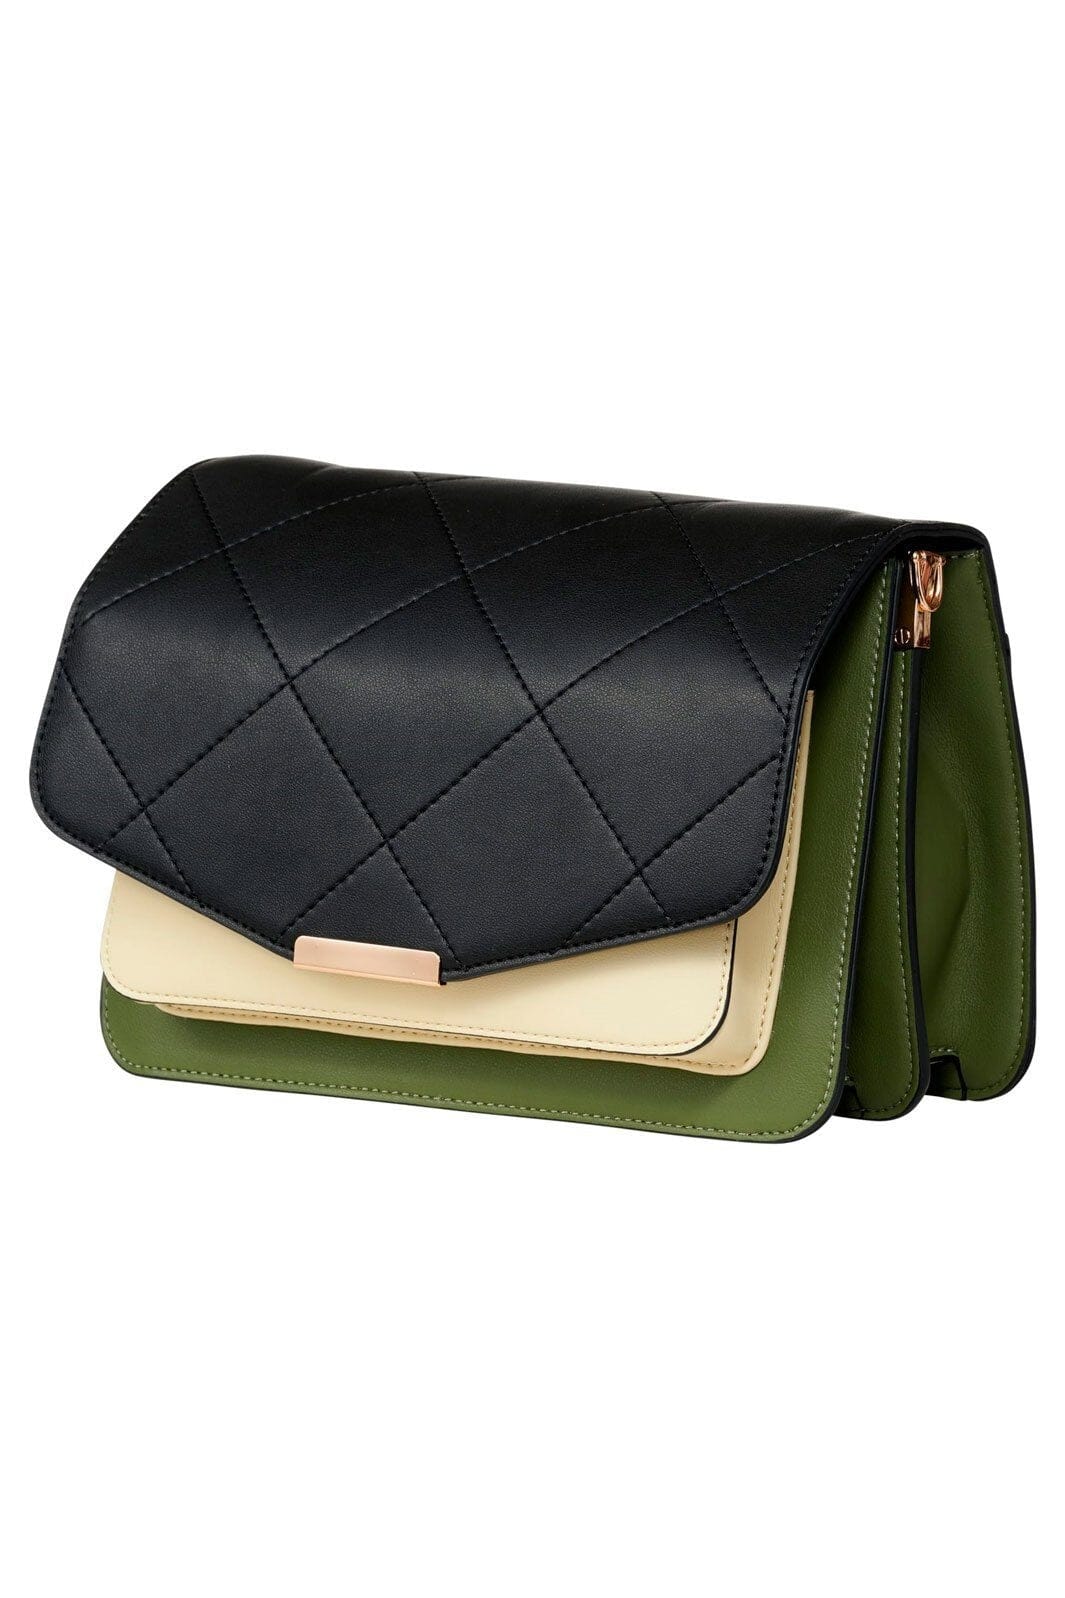 Noella - Blanca Multi Compartment Bag - Black/Green/Cream Tasker 